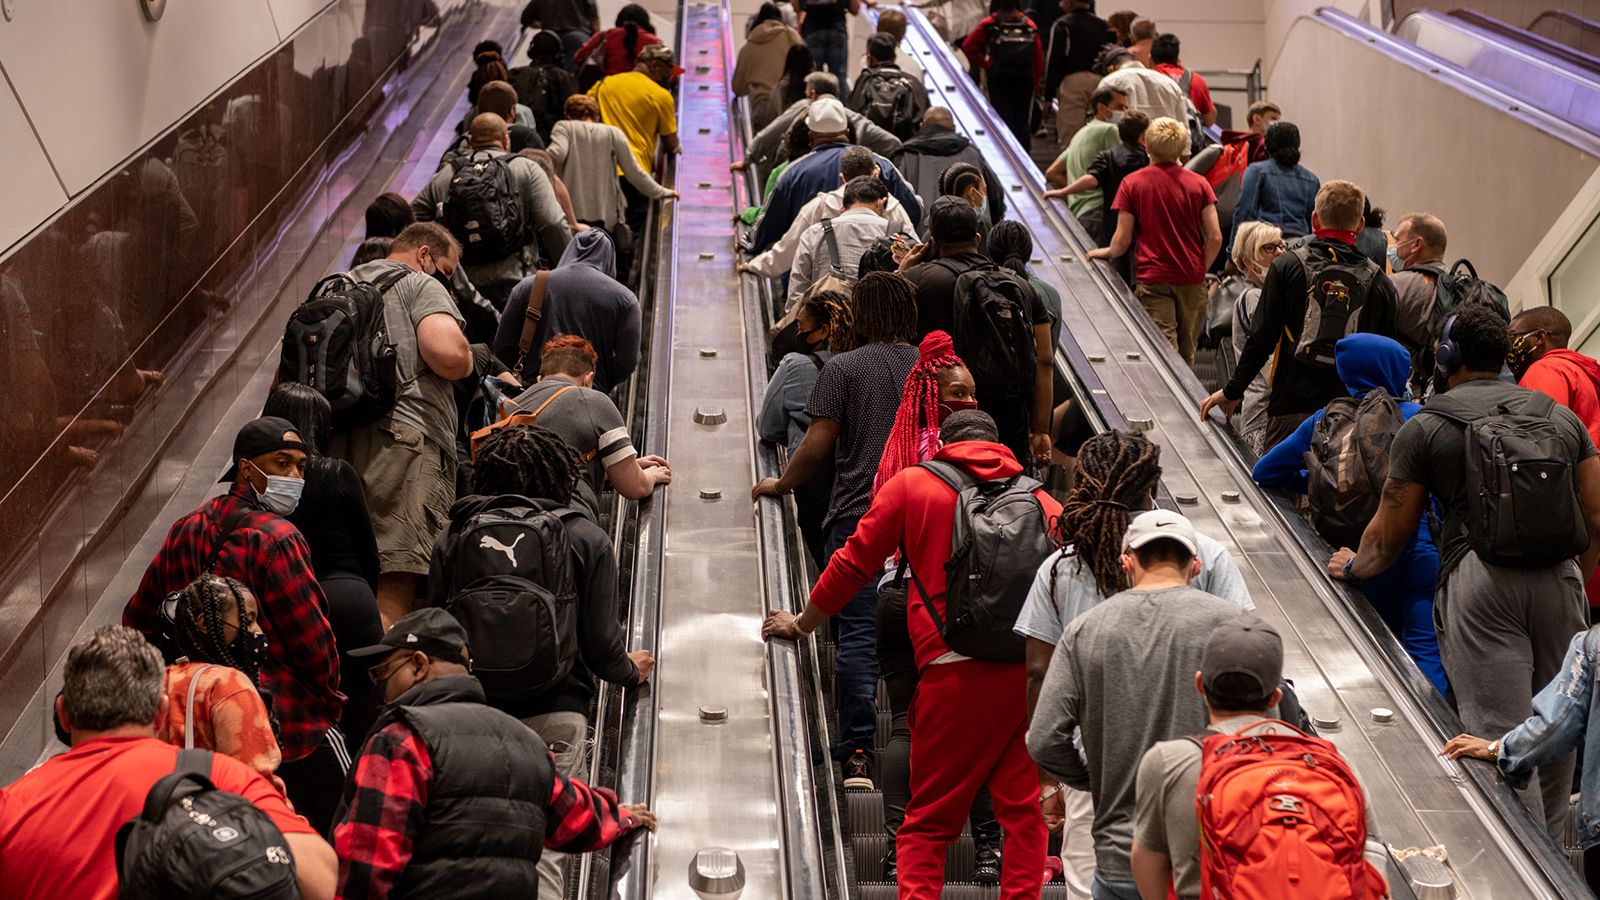 People ride escalators at Atlanta's Hartsfield-Jackson International Airport on Friday, May 28.